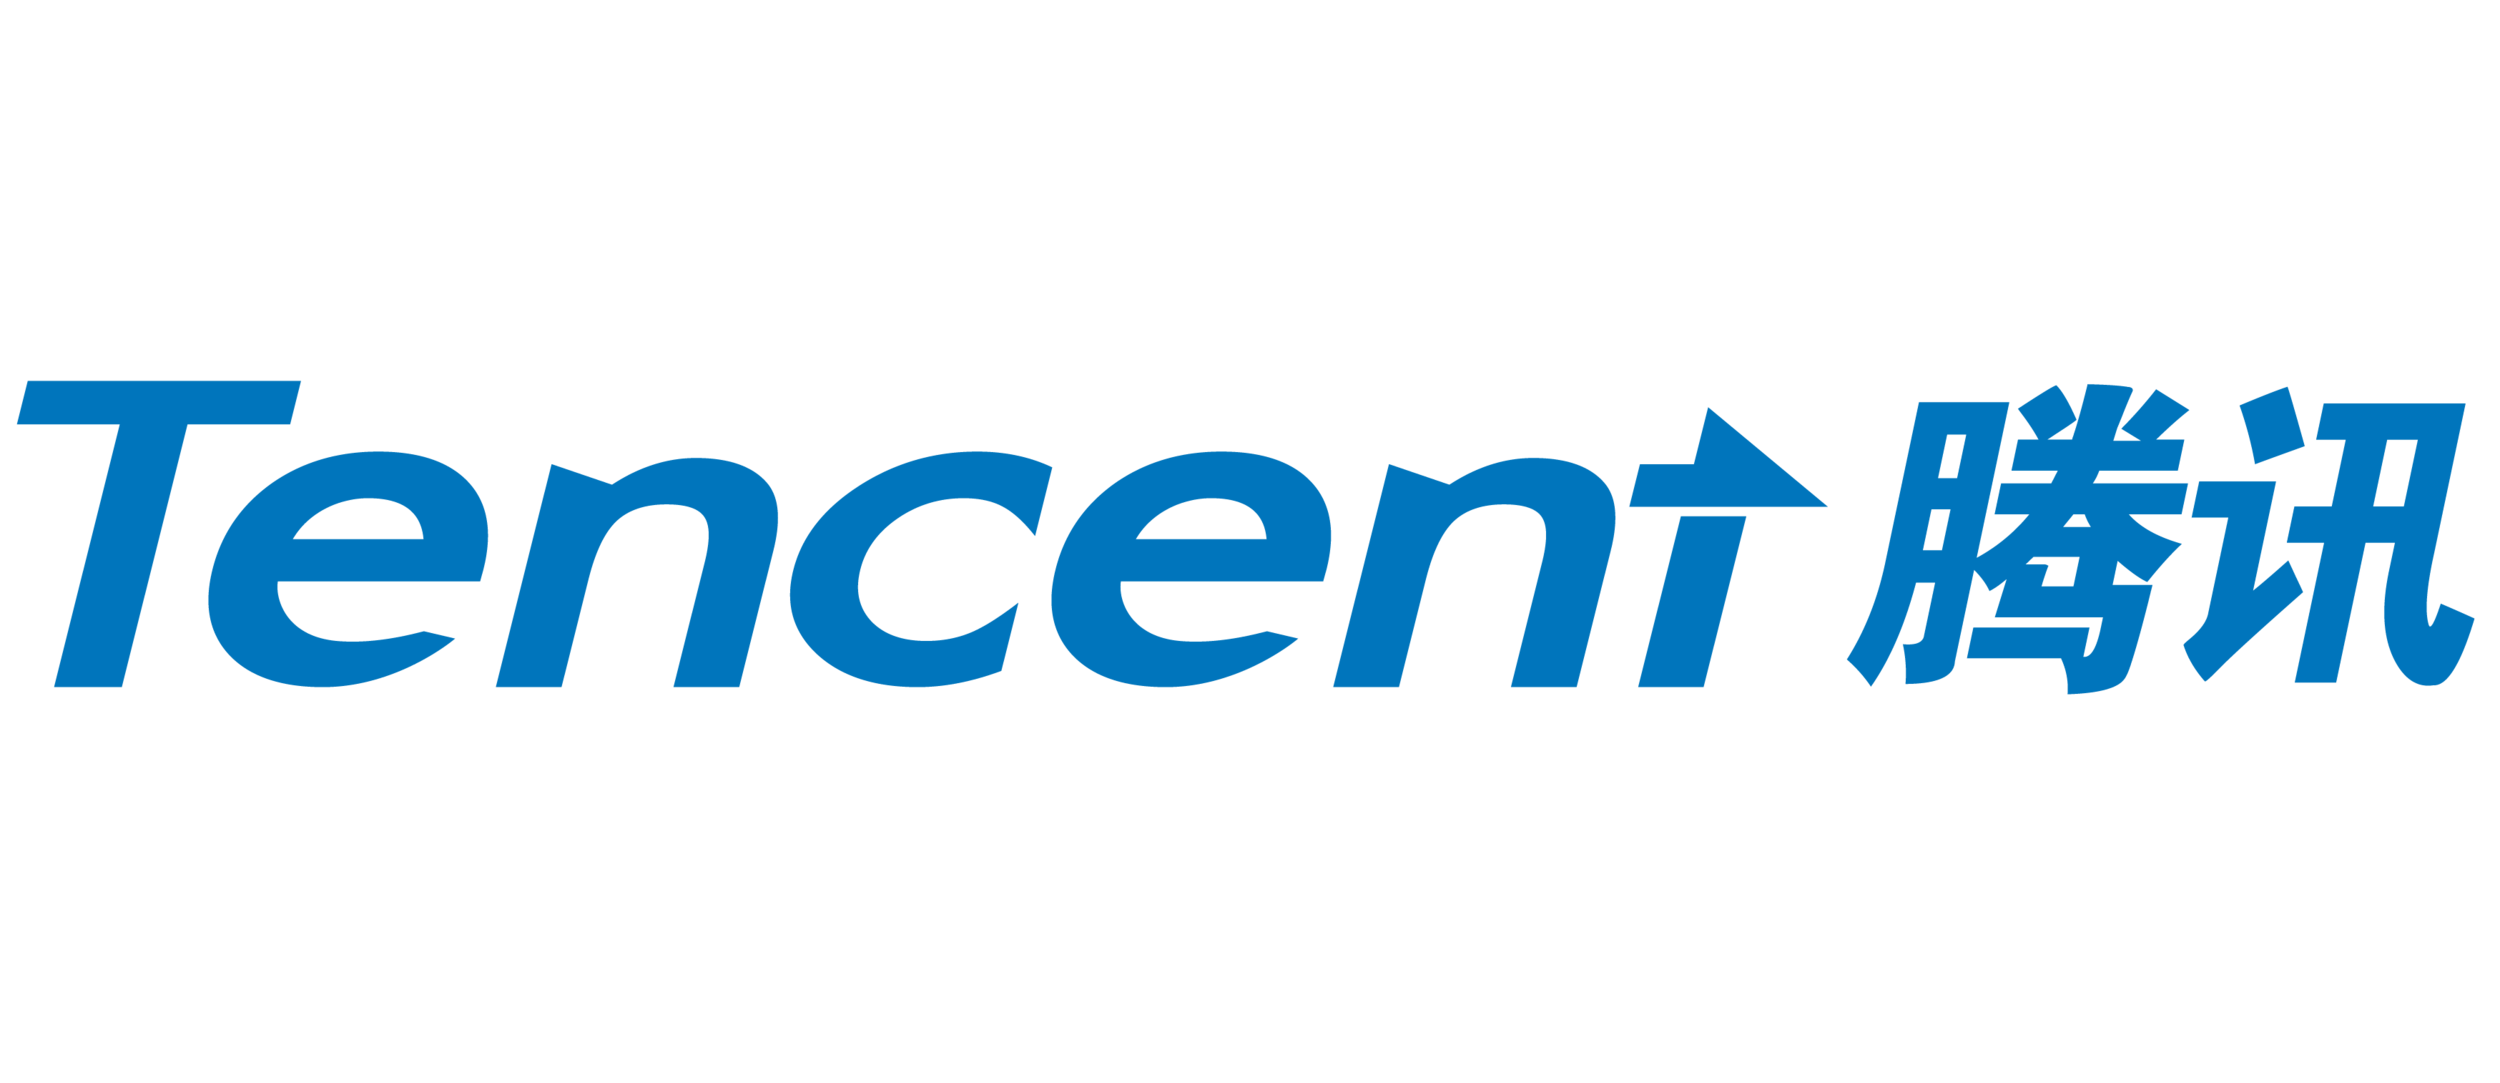 tencent-logo-png-tencent-qq-music-3508.png